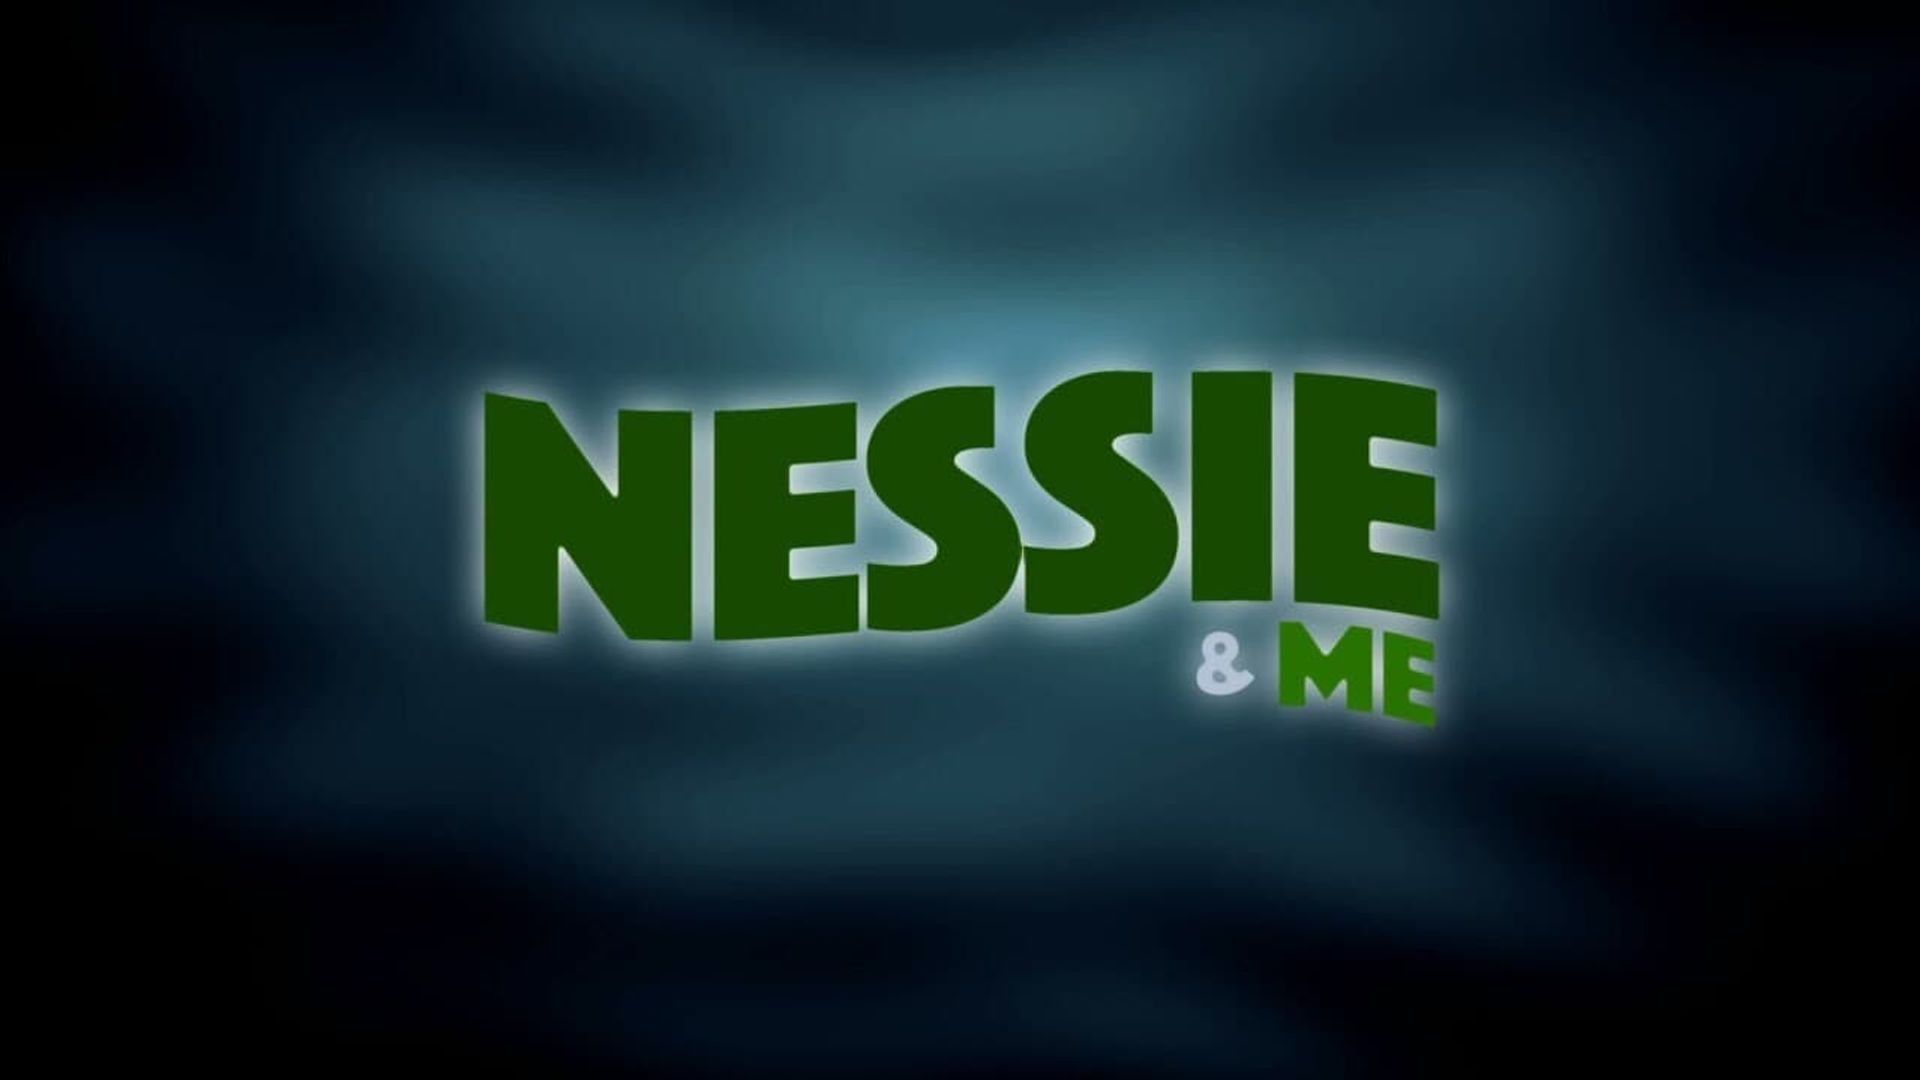 Nessie & Me background